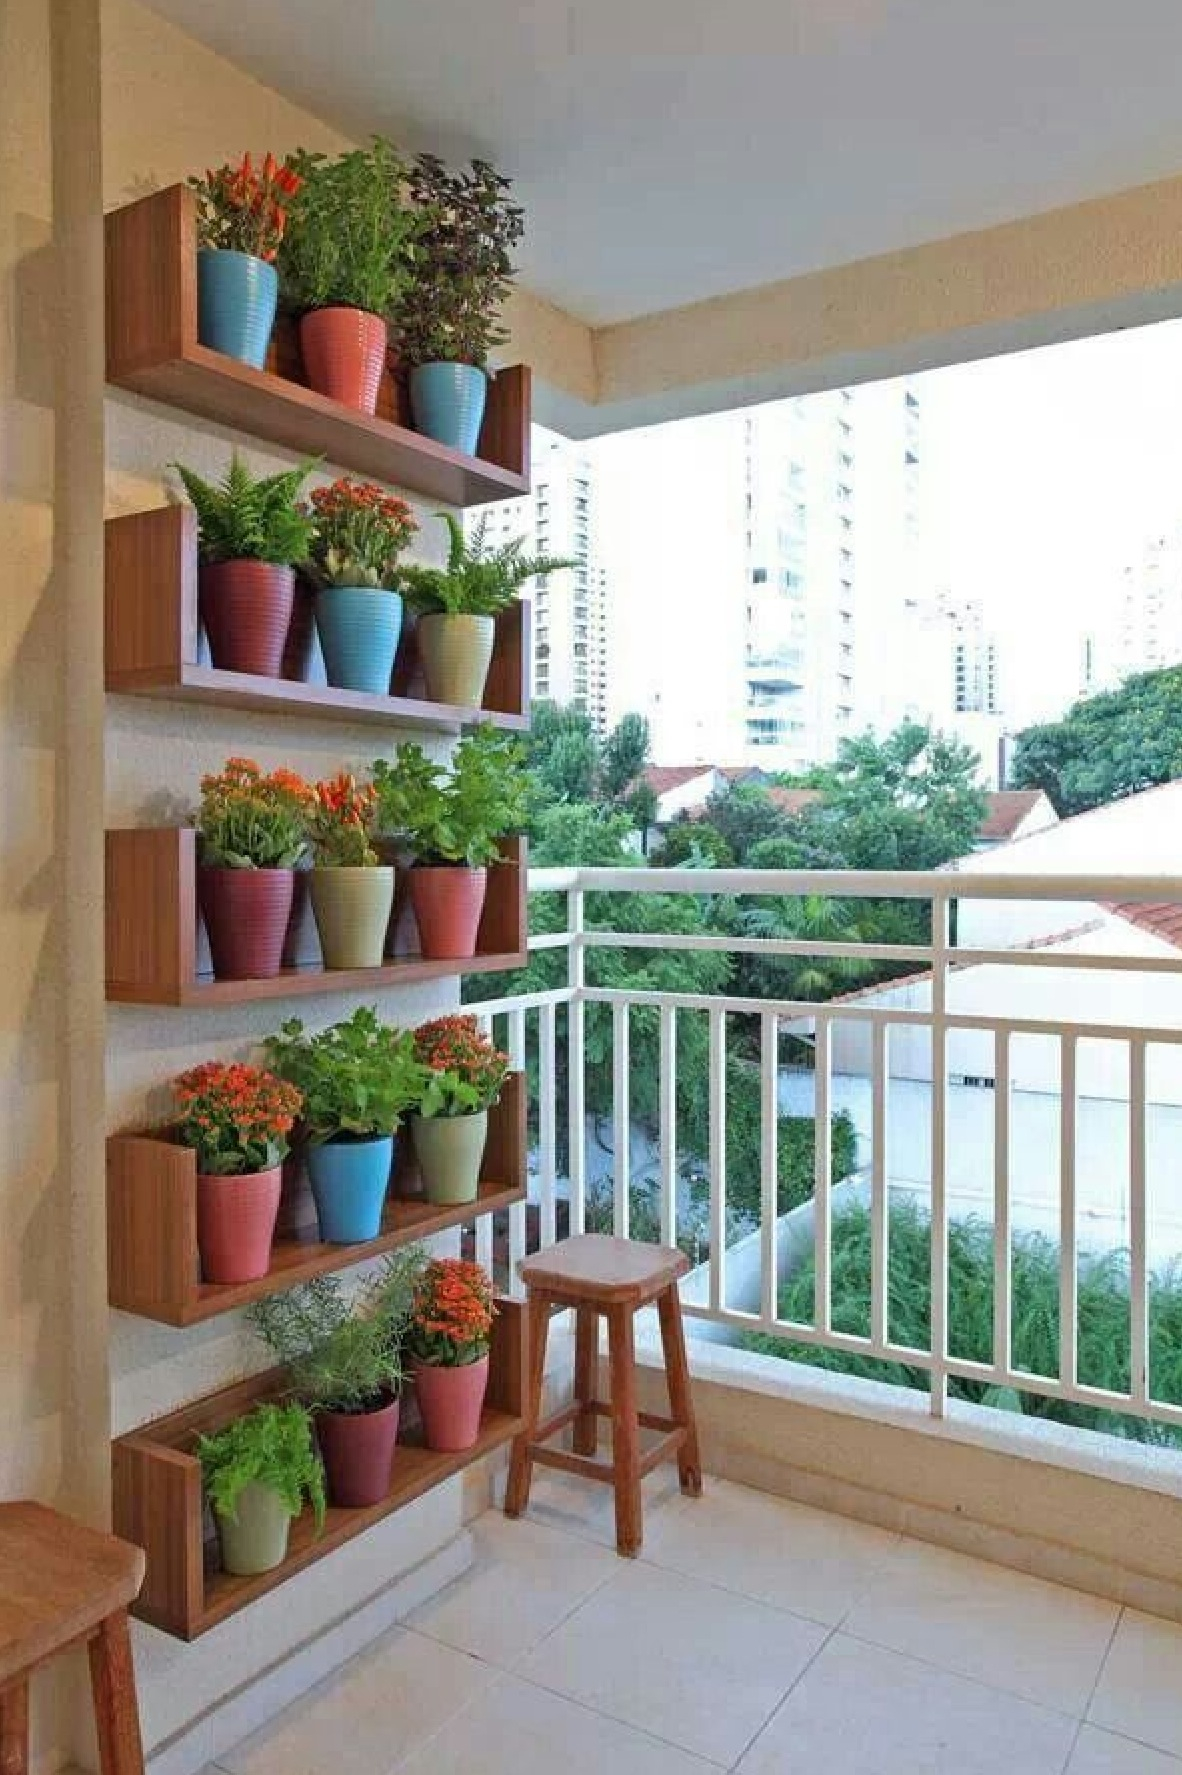 Balcony gardening. Стеллаж для цветов на балкон. Полка для цветов на балкон. Полки для цветов на лоджии. Полочки на балконе для цветов.